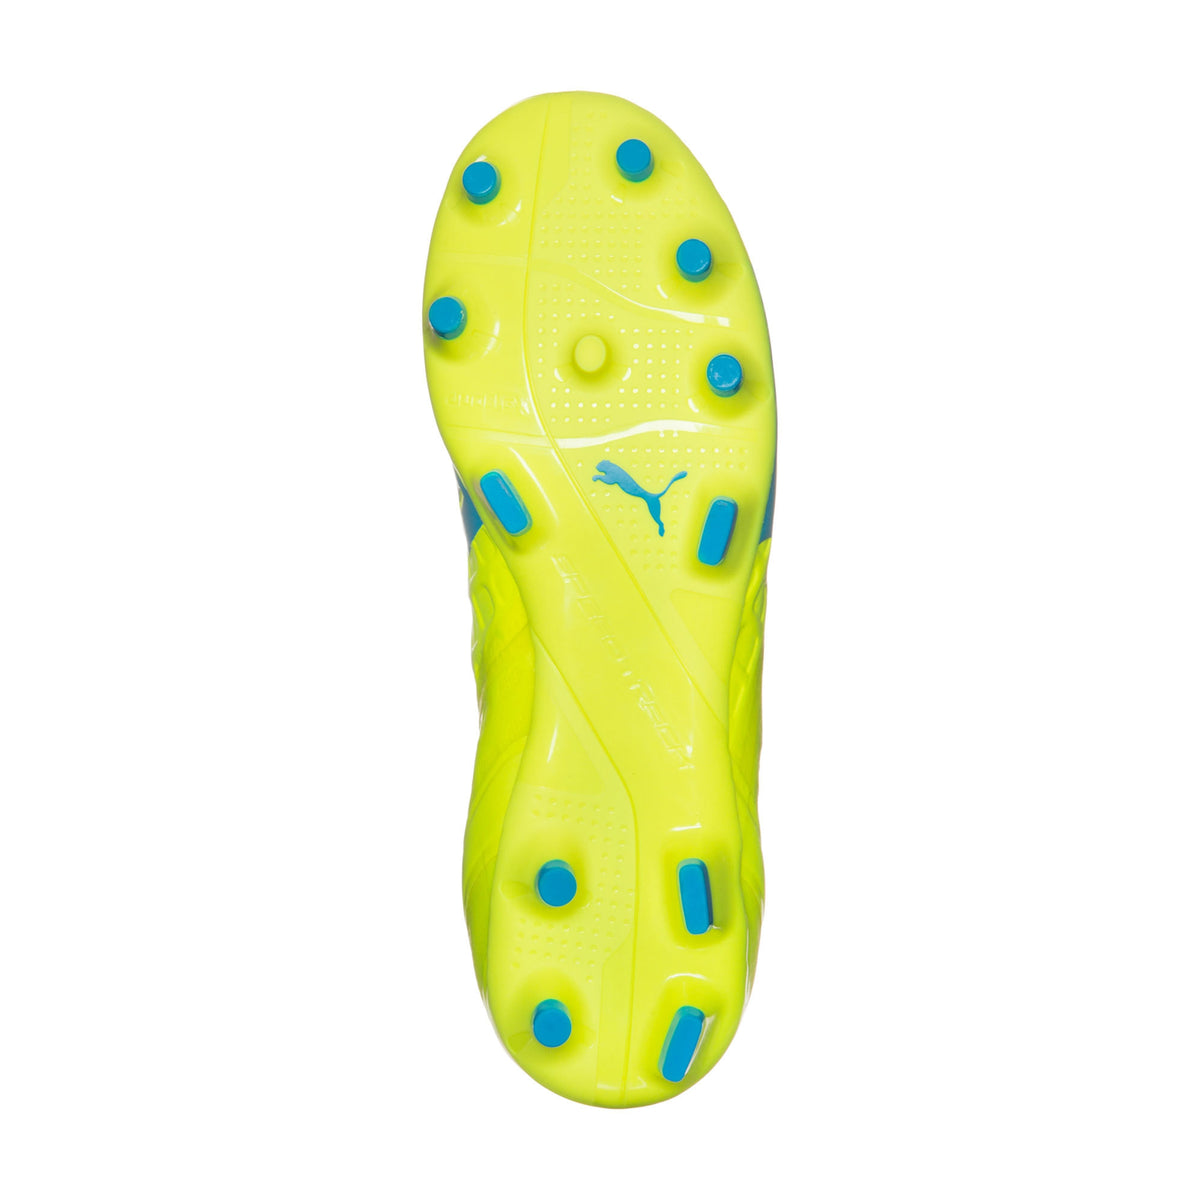 Puma evoSPEED 1.4 FG Junior chaussure de soccer enfant jaune bleu semelle